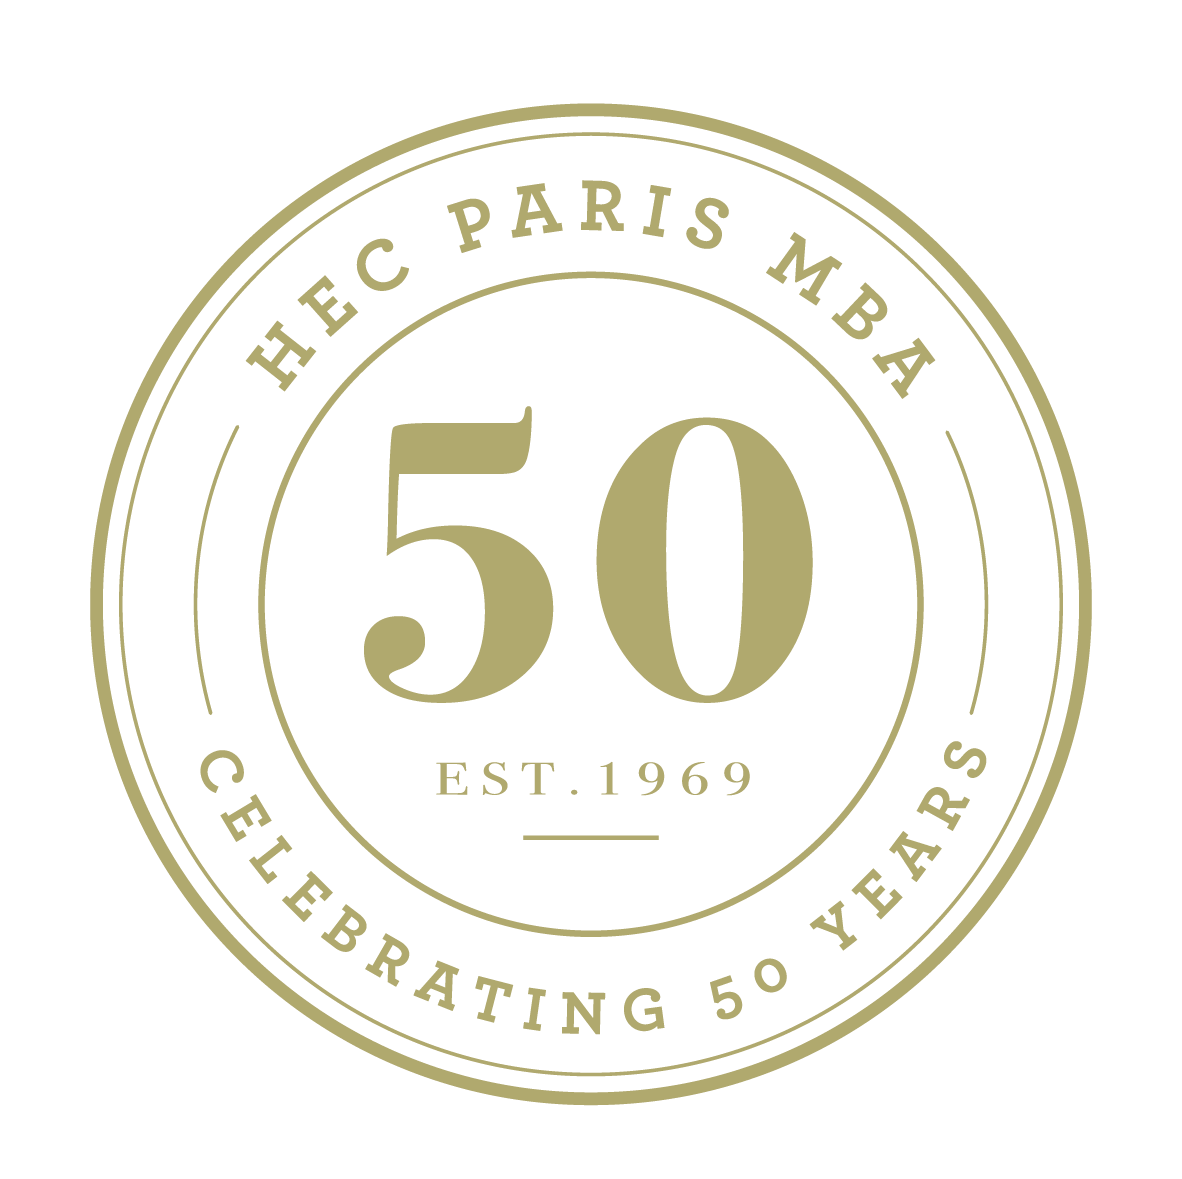 Image of 50th anniversary logo